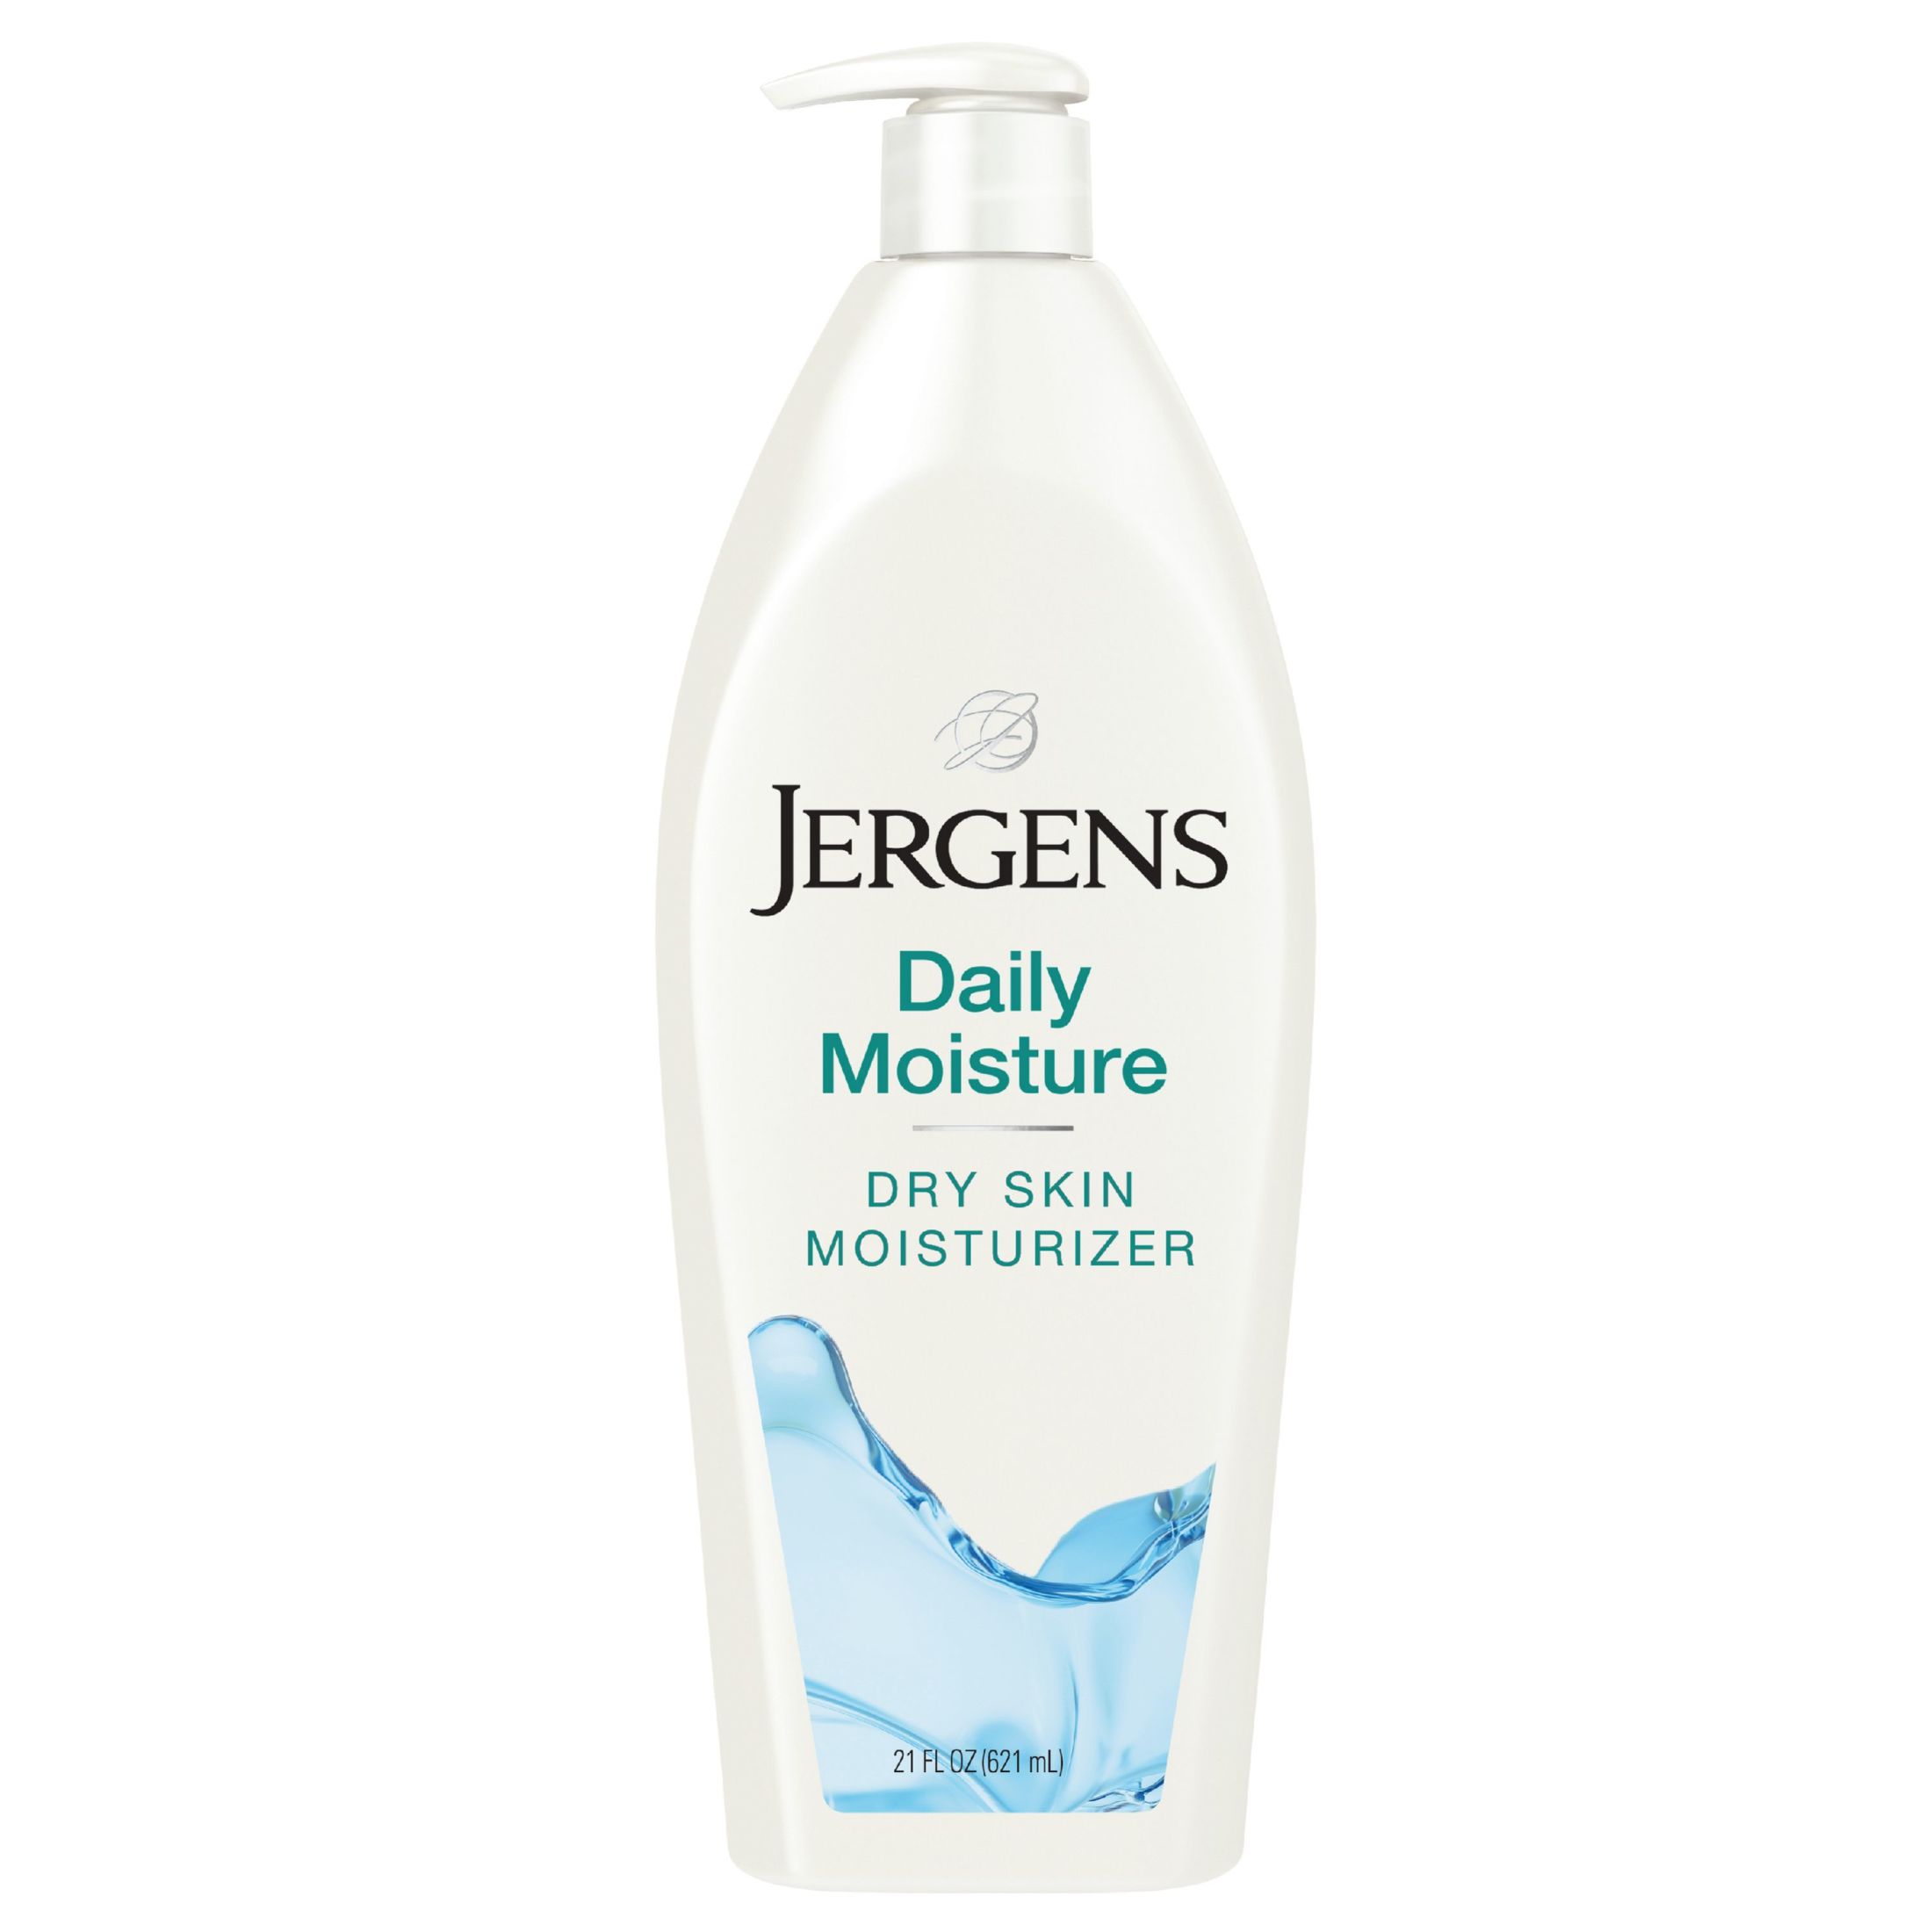 Jergens Daily Moisture Body Lotion With Hydralucence Blend, Dry Skin Moisturizer, 21 Fl Oz - image 1 of 11